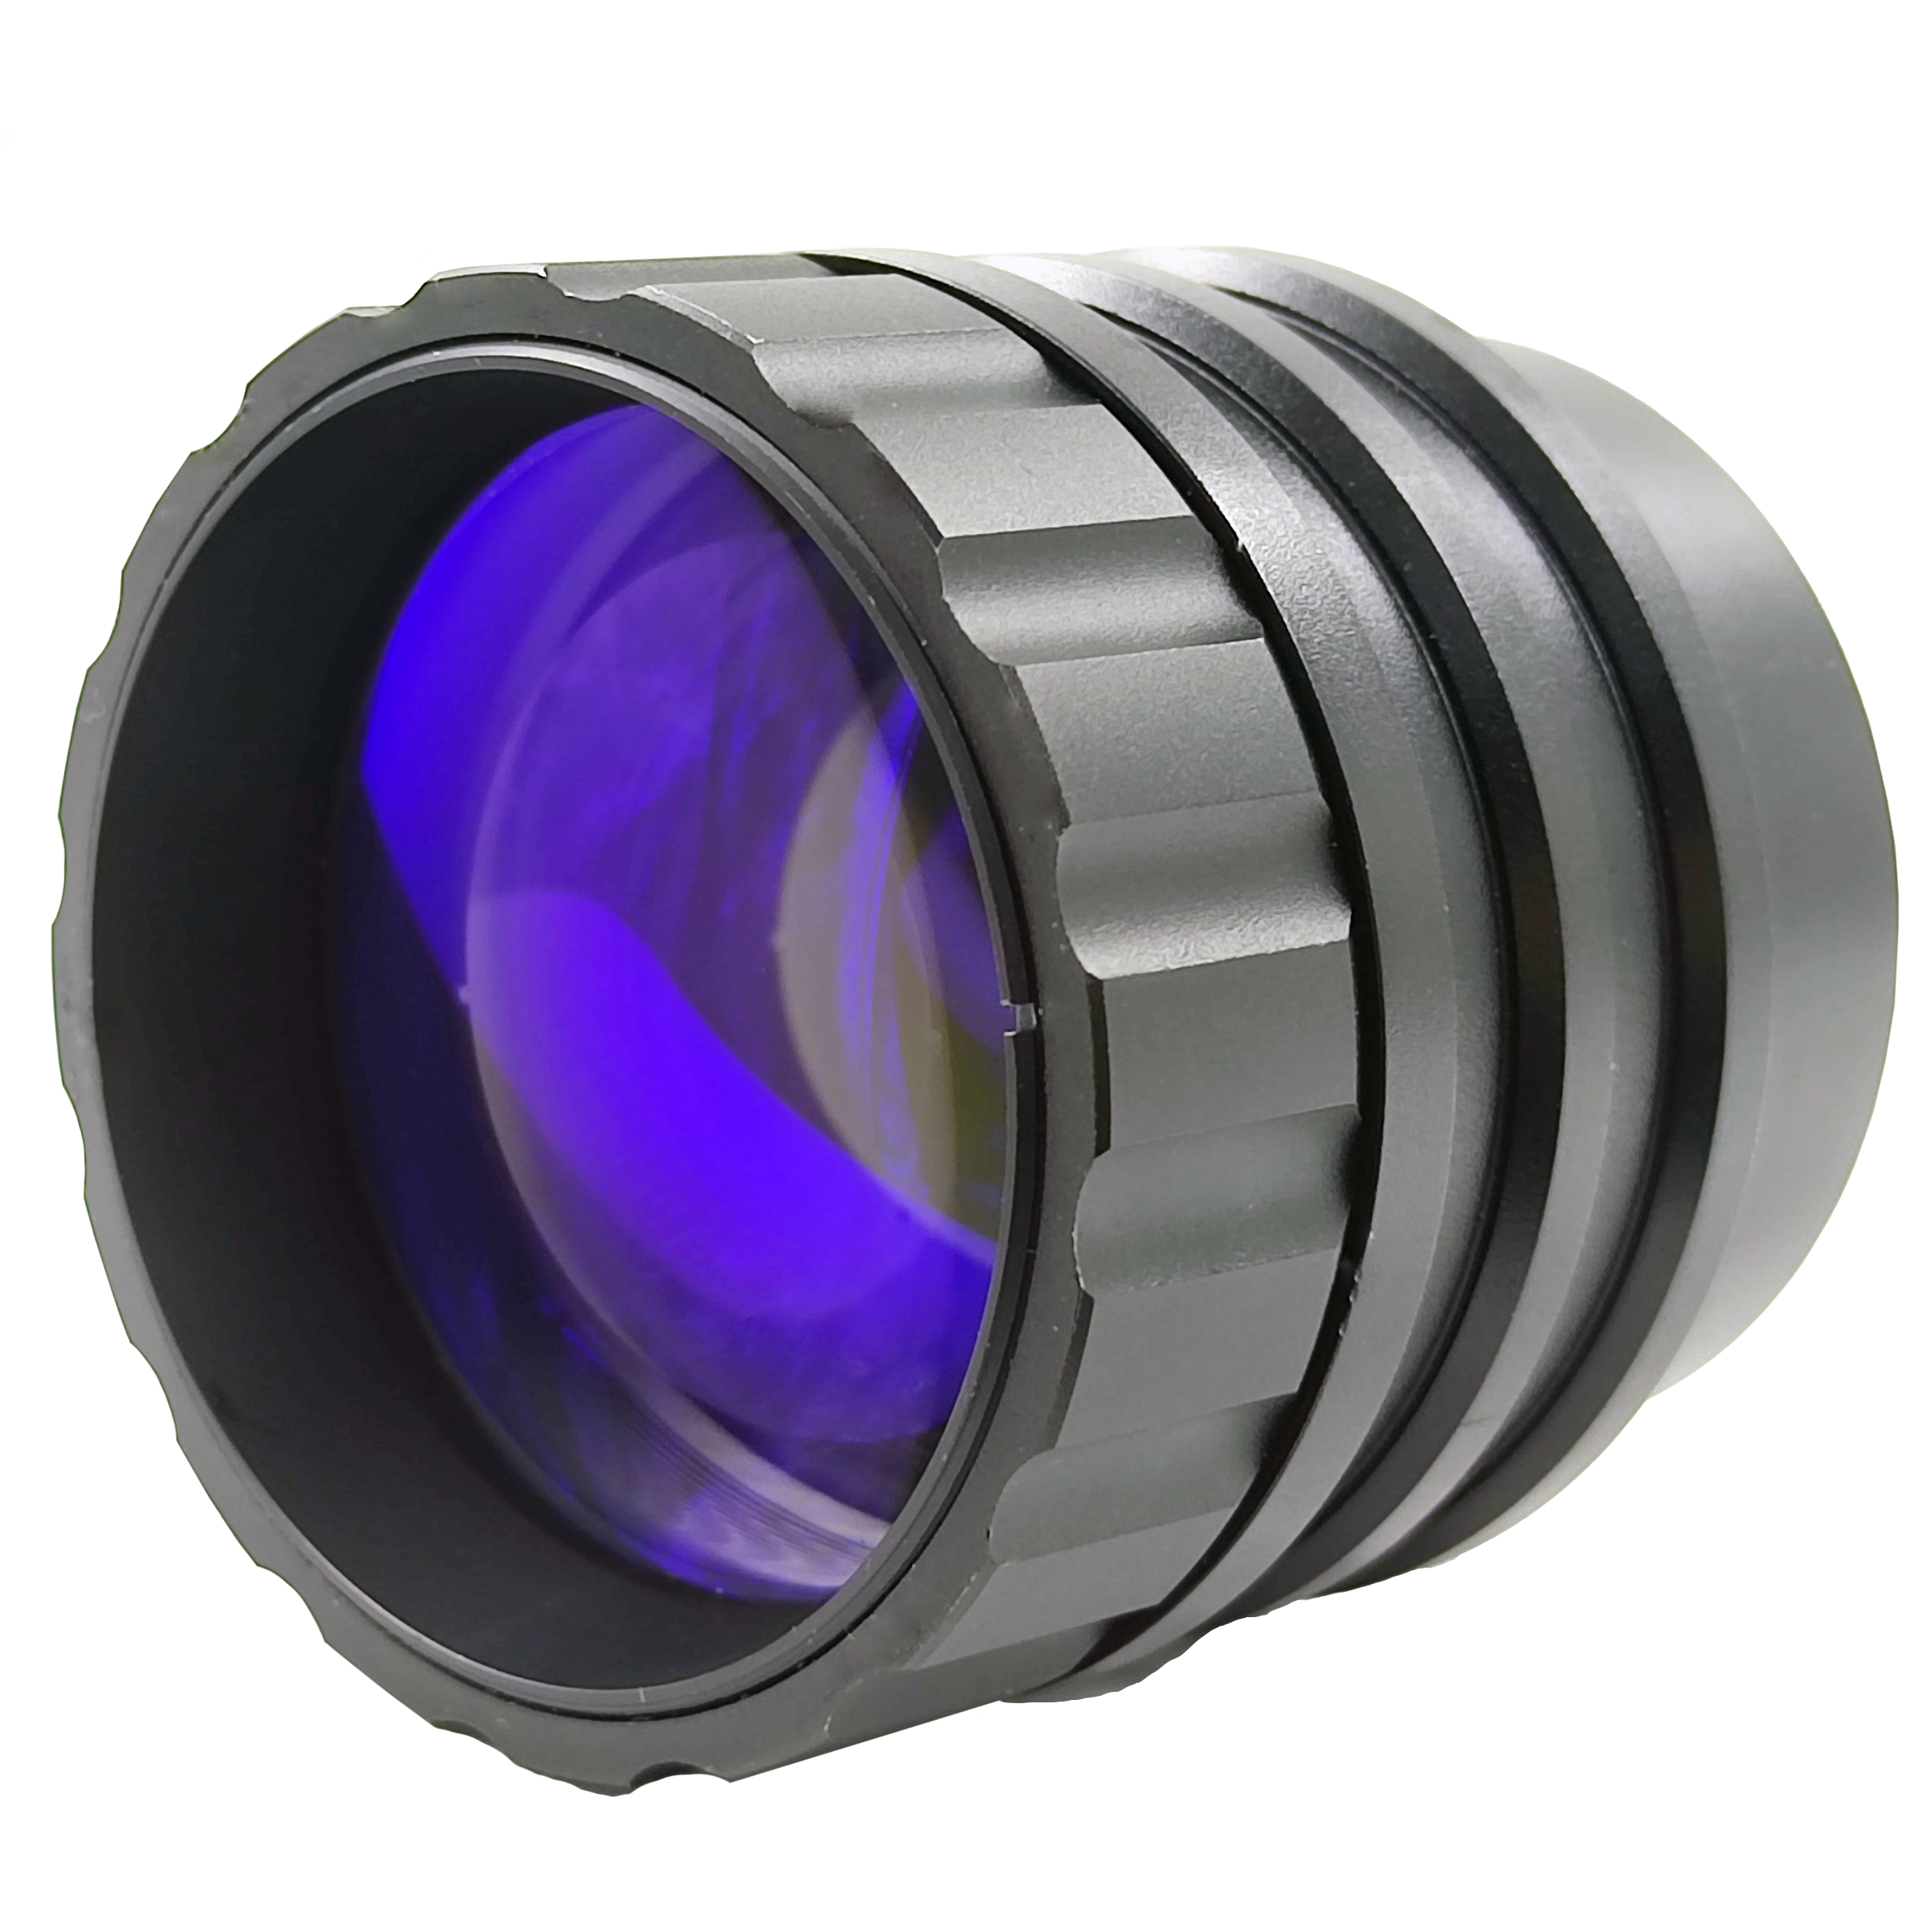 SETTALL Visible light rifle scope system scheme monocular telescope(Optional accessories)